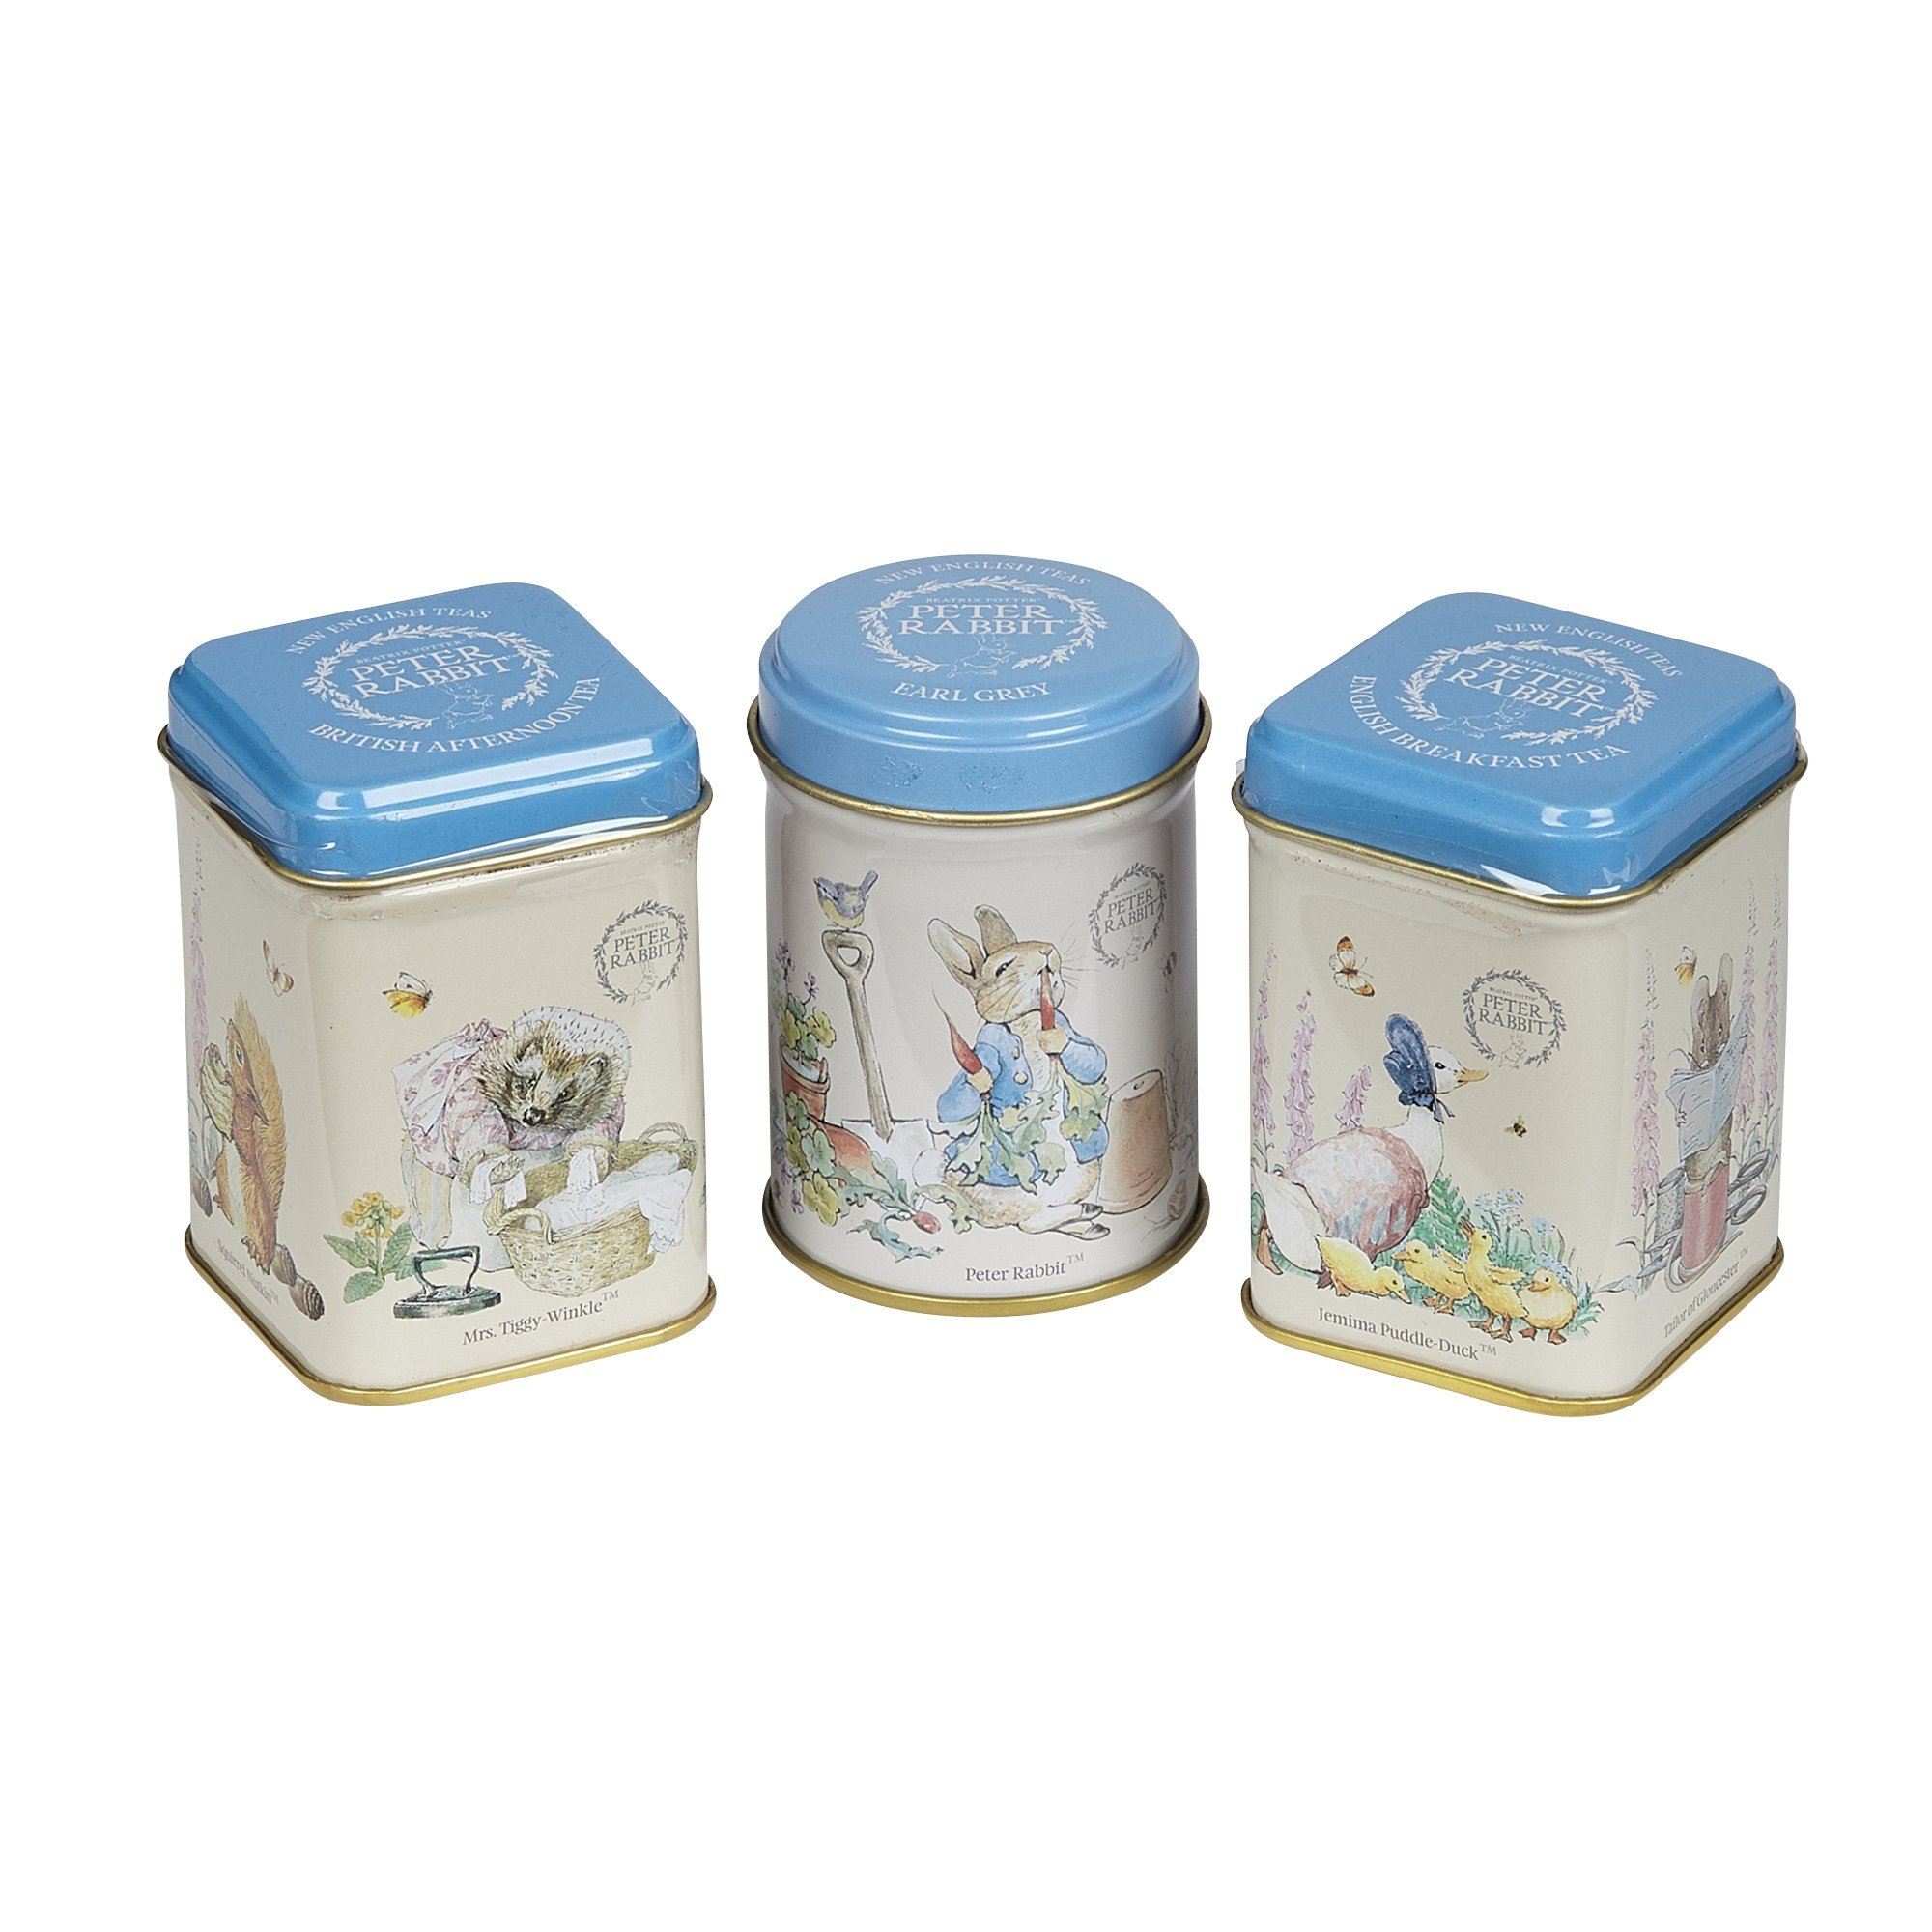 Beatrix Potter Tea Tin Gift Set Black Tea New English Teas 